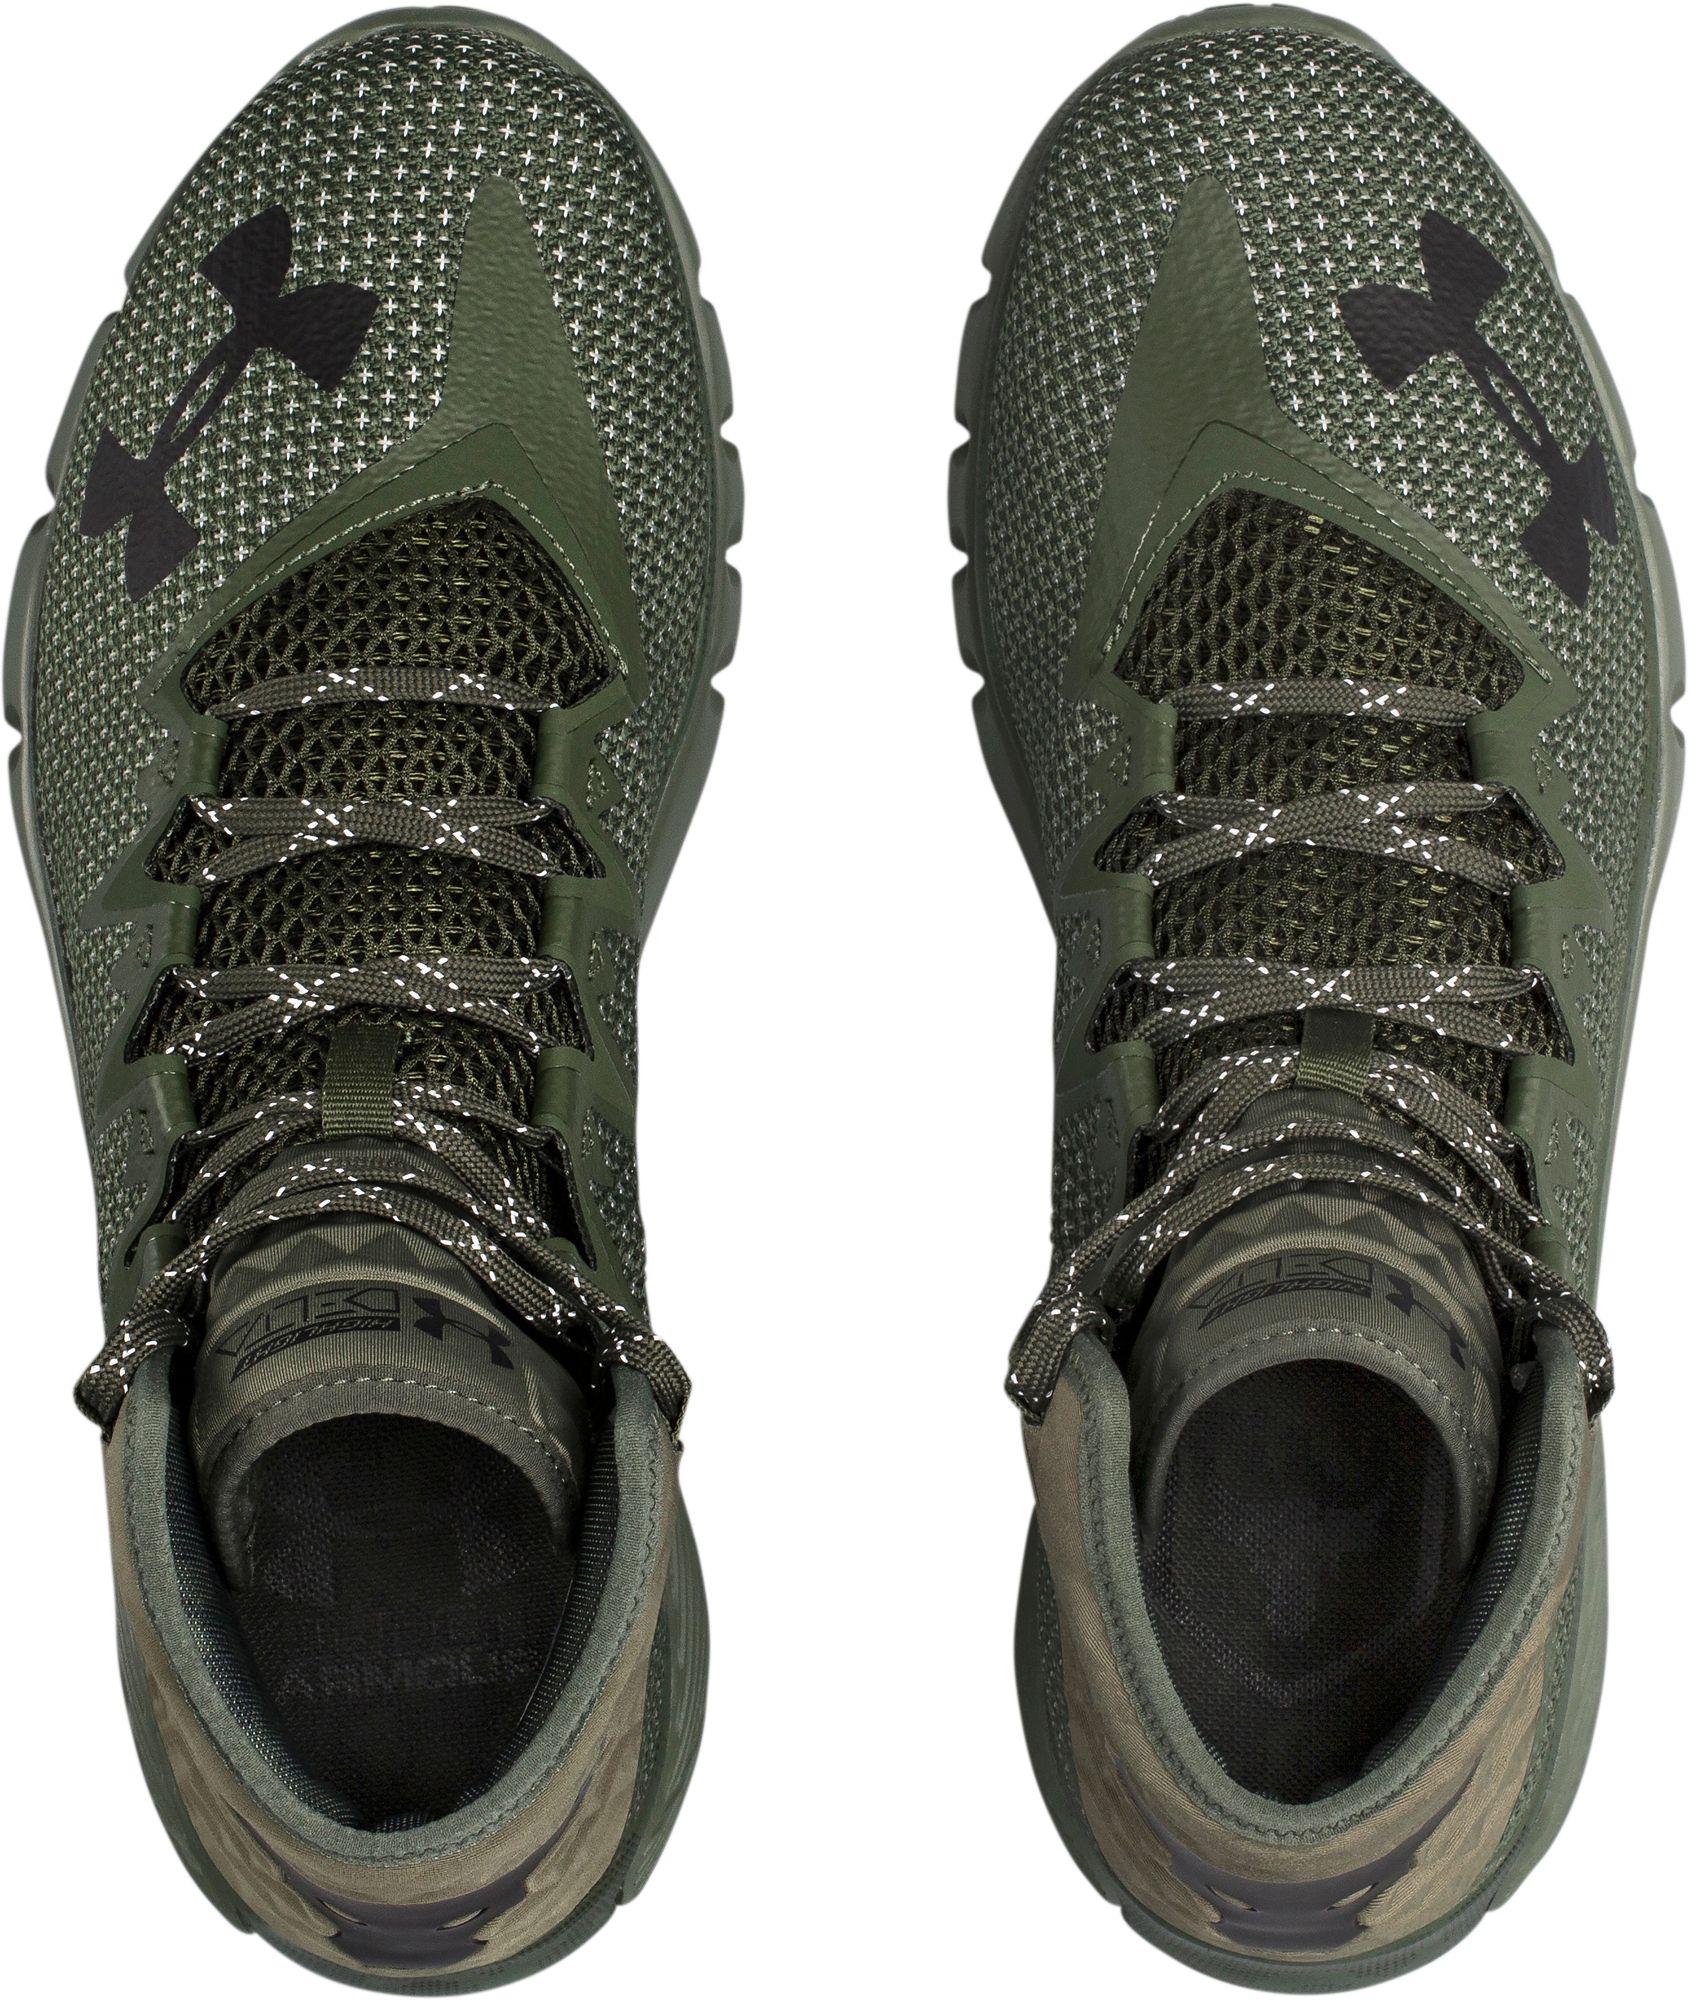 3020175-300 Under Armour UA Project Rock Delta DNA Shoes Dark Green SZ 12 